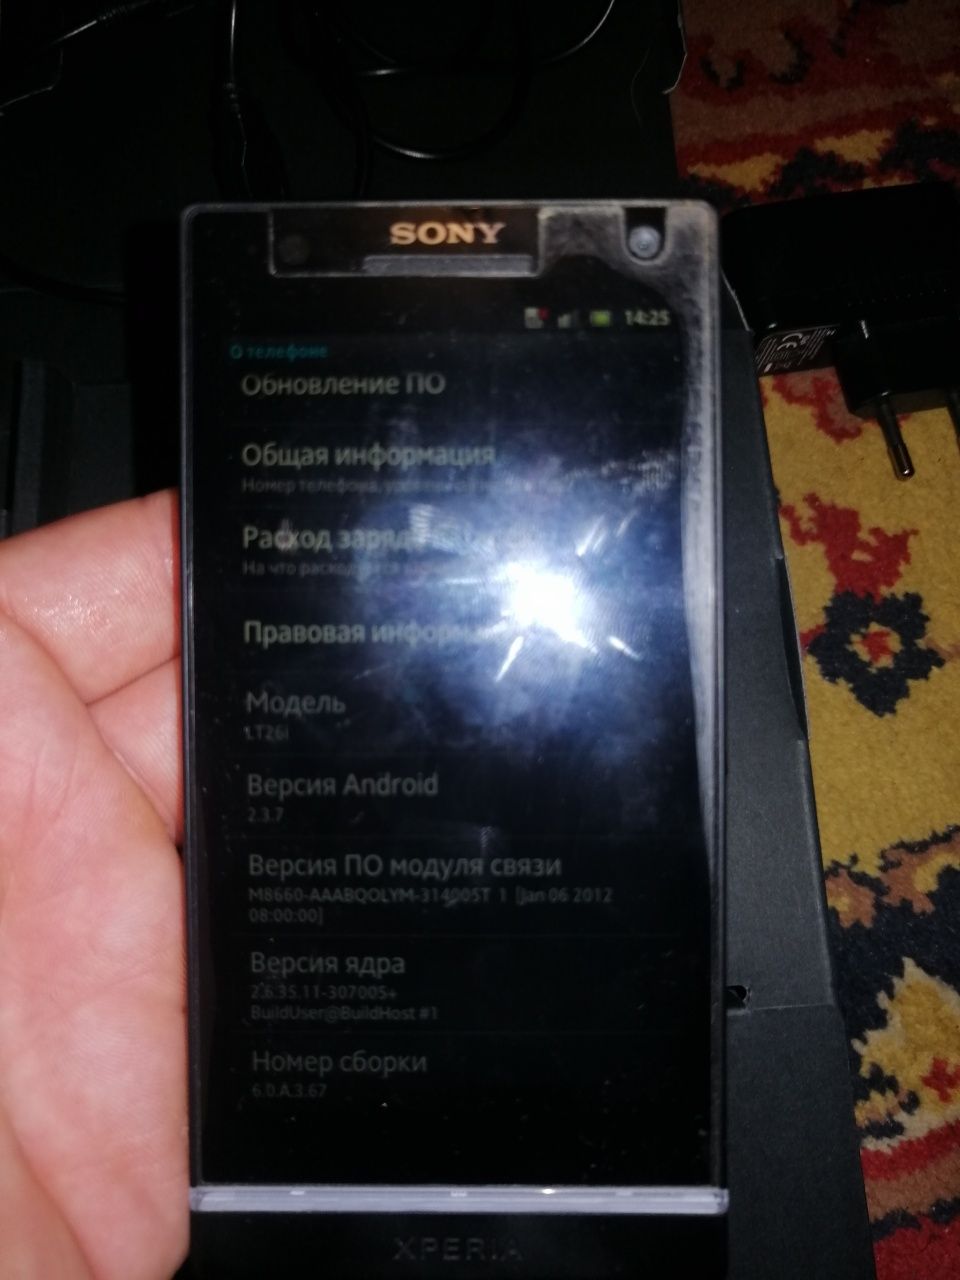 Sony Ericsson LT26i